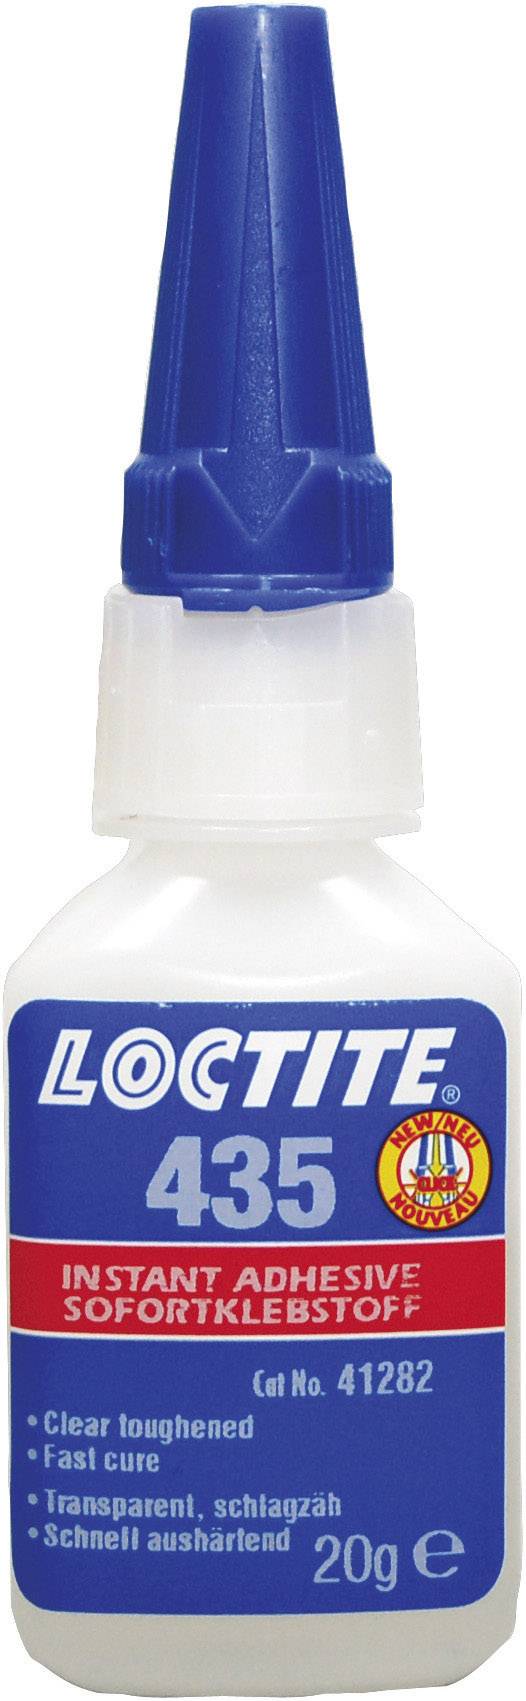 Loctite 435 Toughened Cyanoacrylate - Impact Resistant